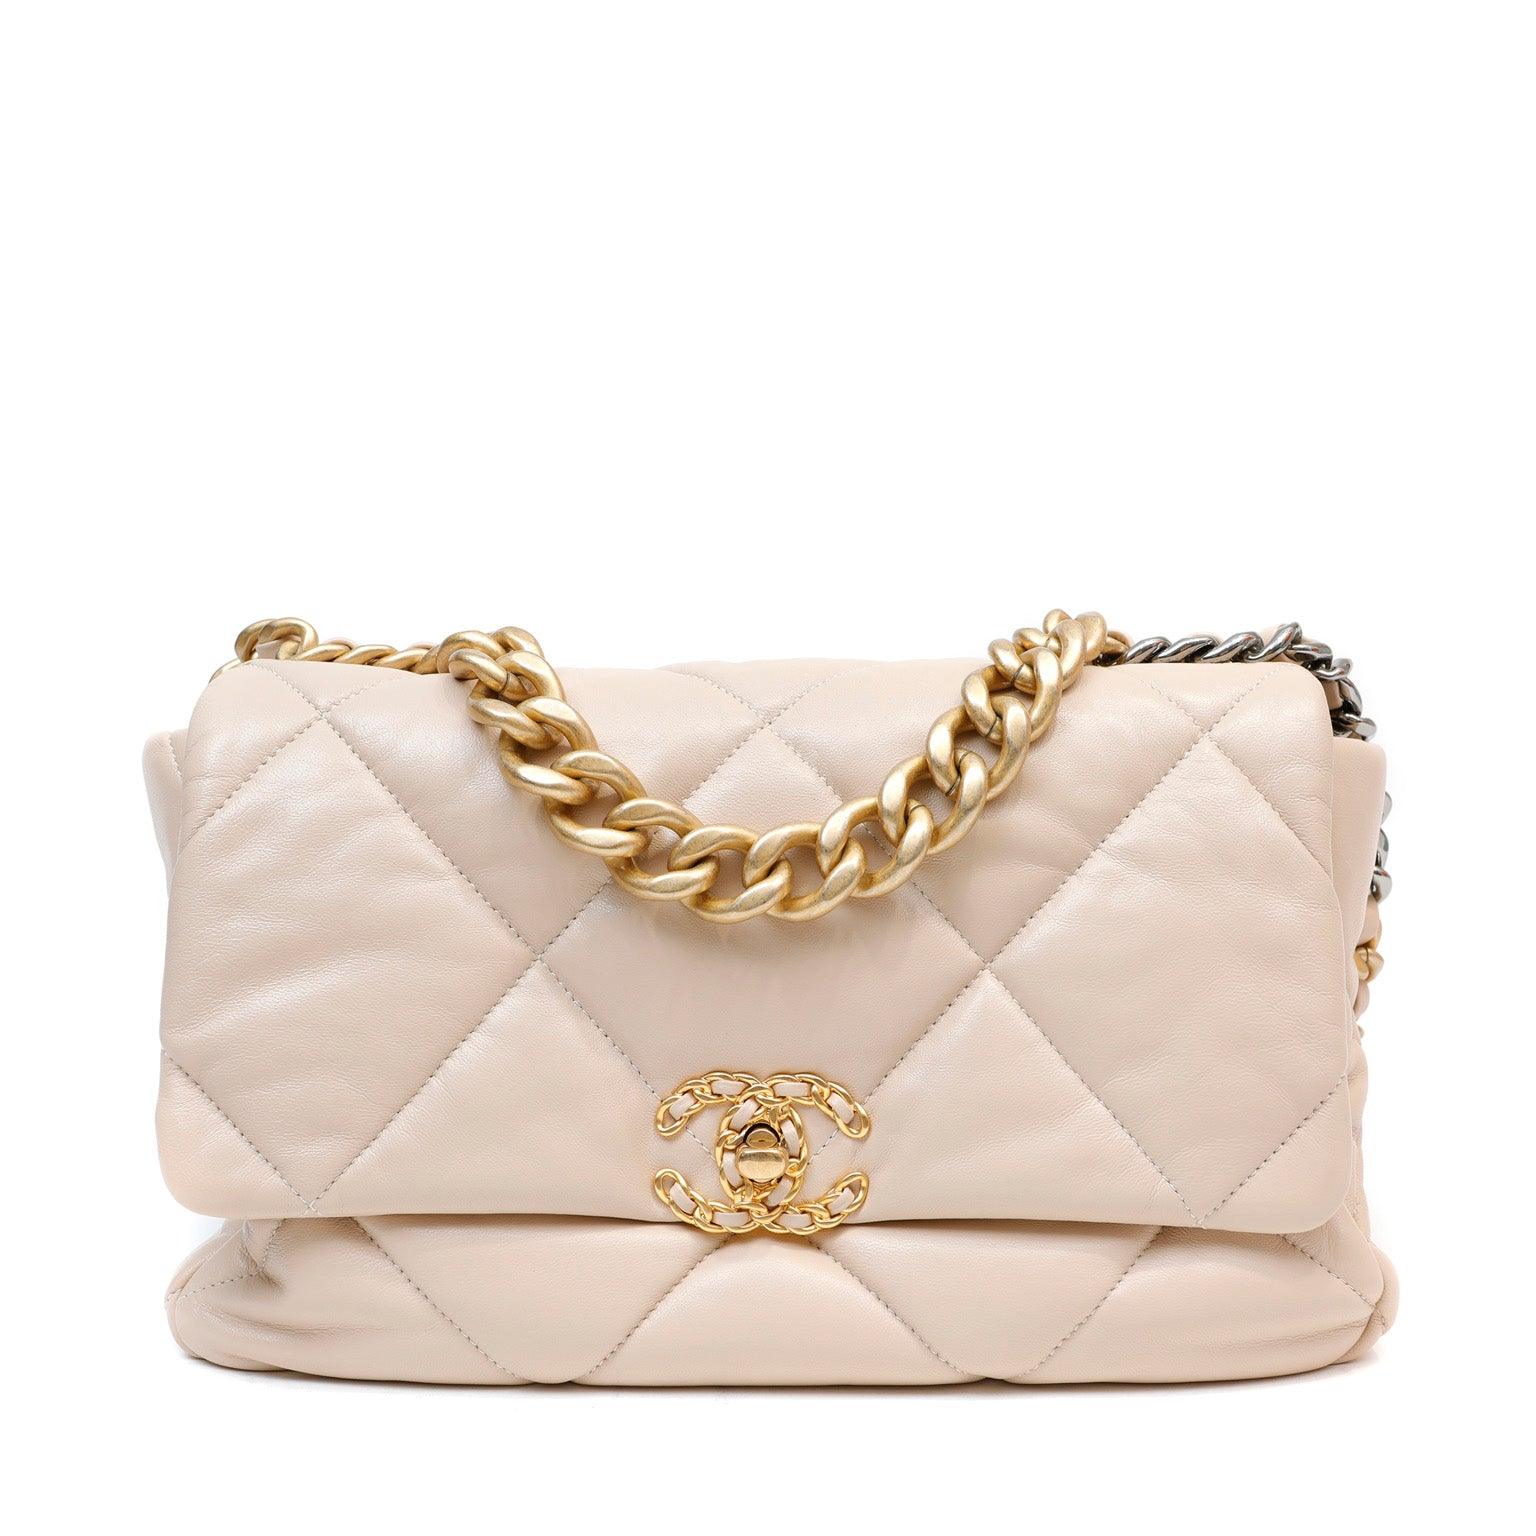 CHANEL ICON 2021-22FW Chanel 19 Maxi Handbag